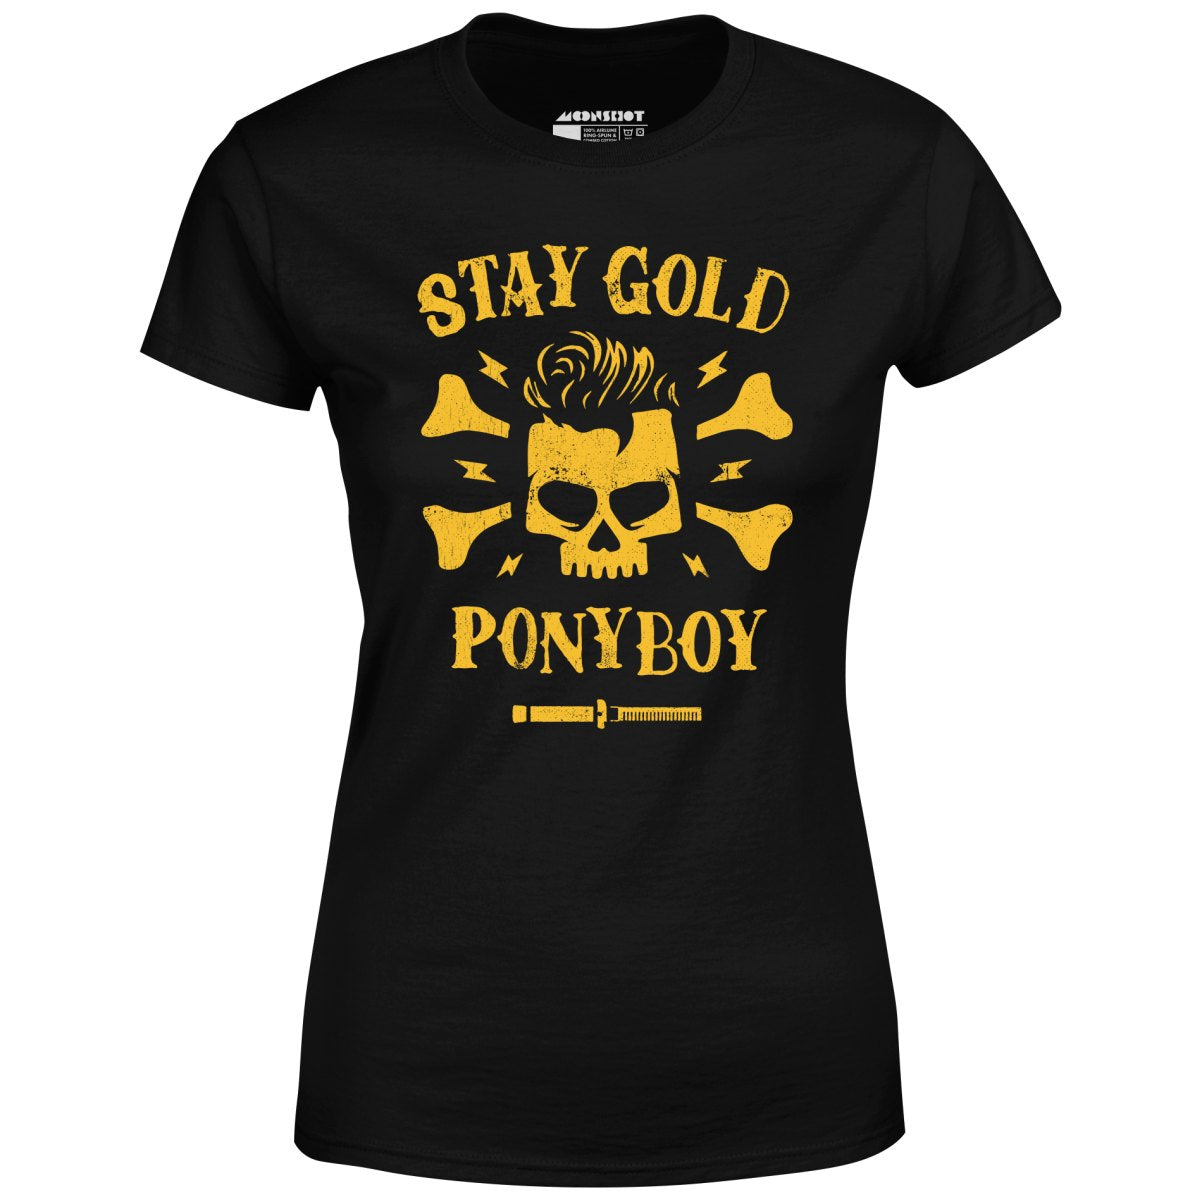 Stay Gold Ponyboy - Women's T-Shirt